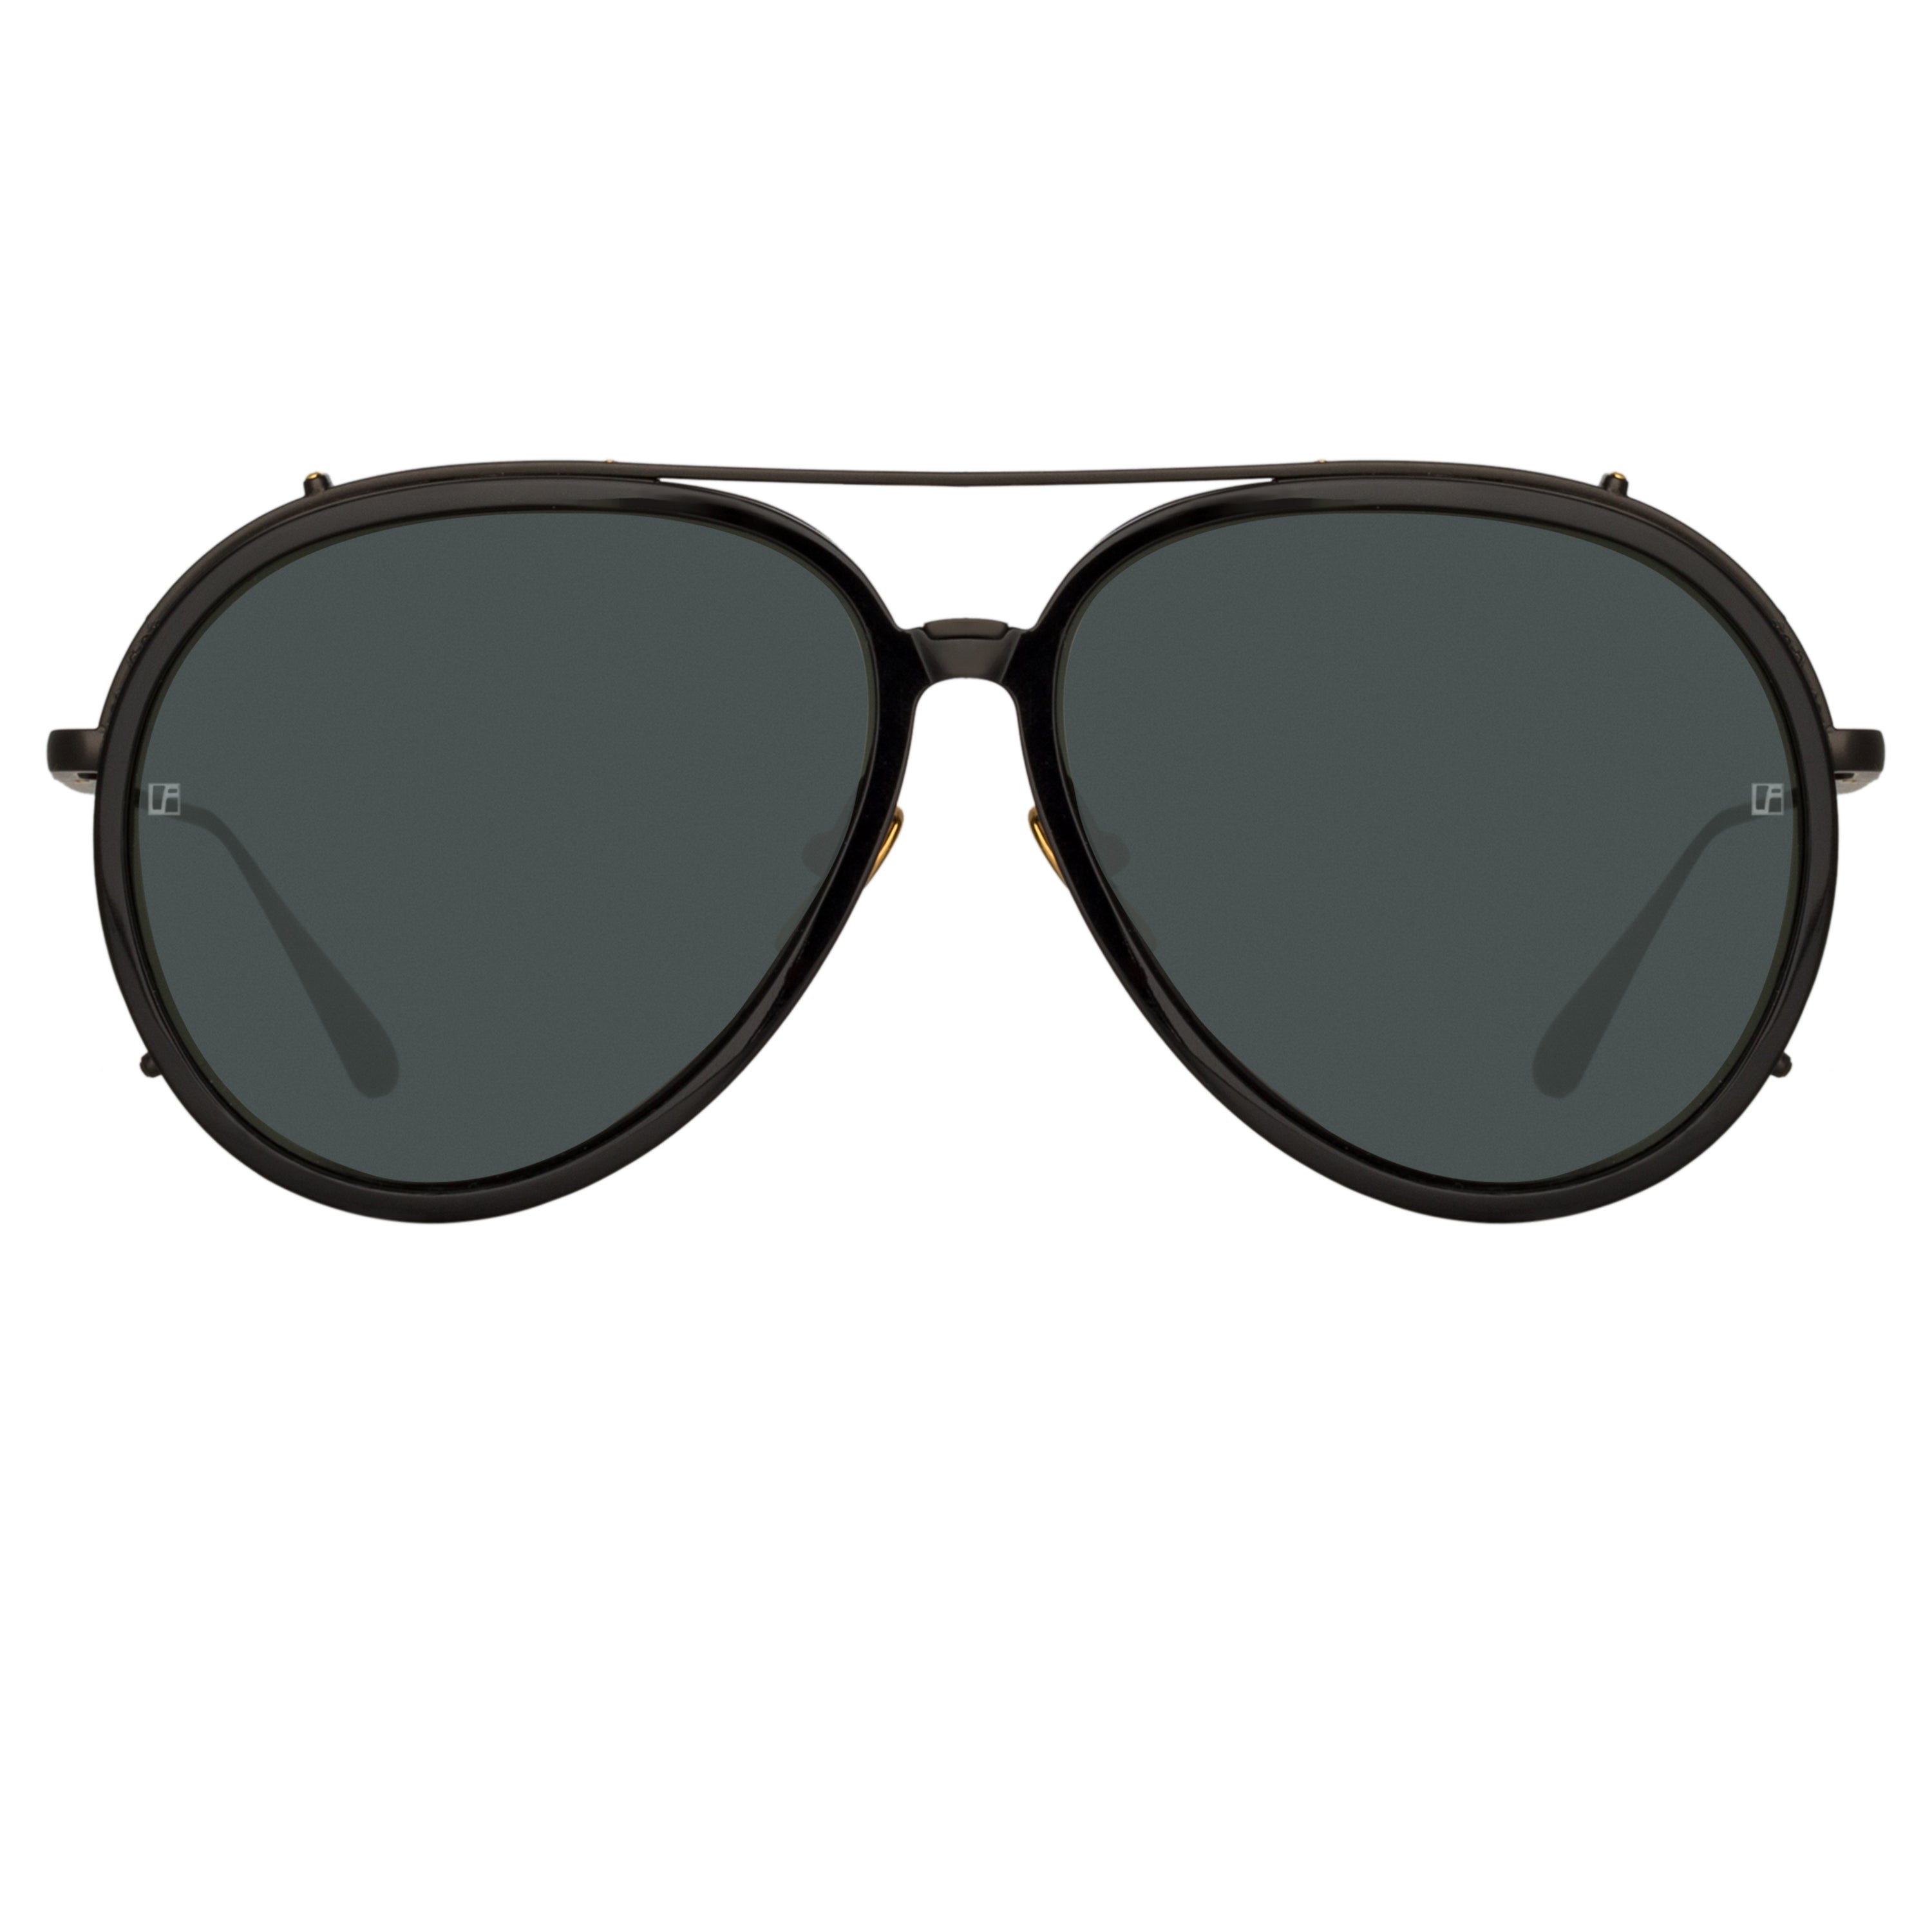 Maverick Aviator Sunglasses in Nickel